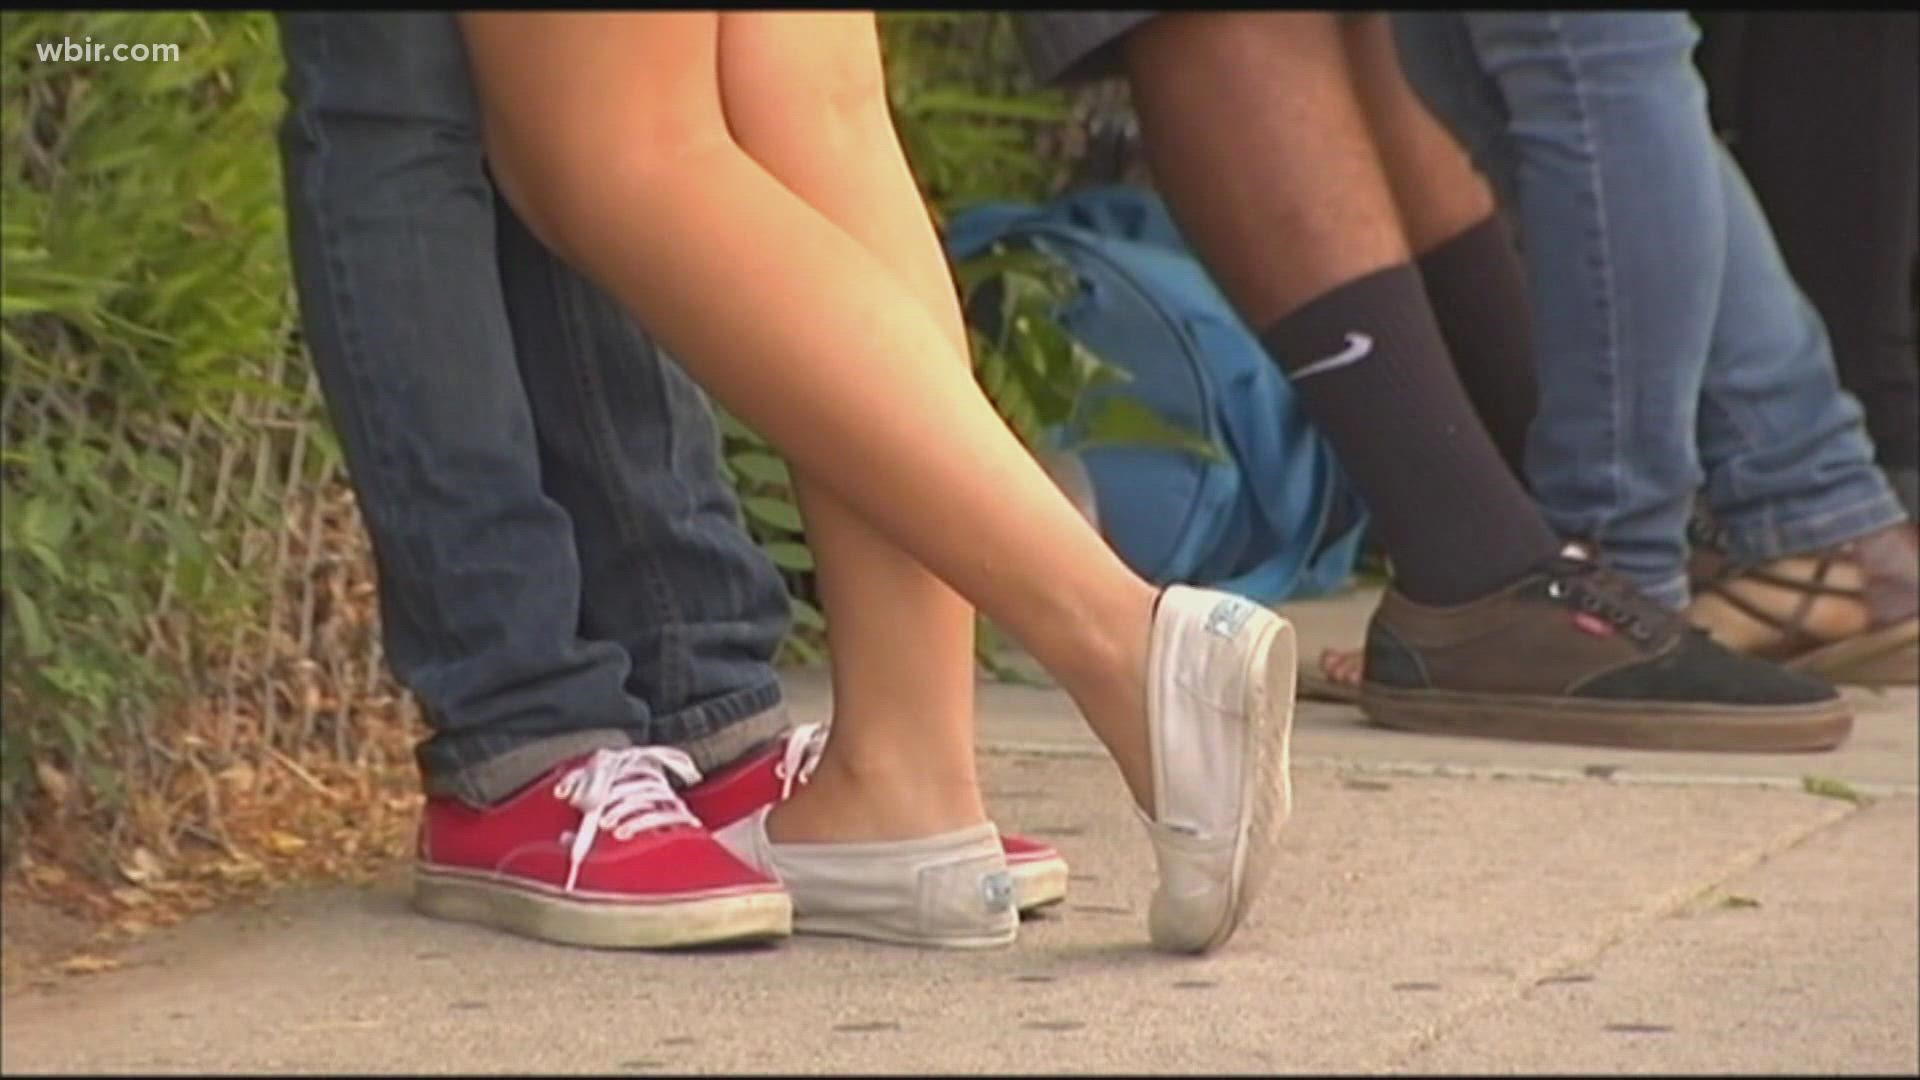 America School Girl Xxx Videos - Tennessee sees increase in teen relationship violence | wbir.com